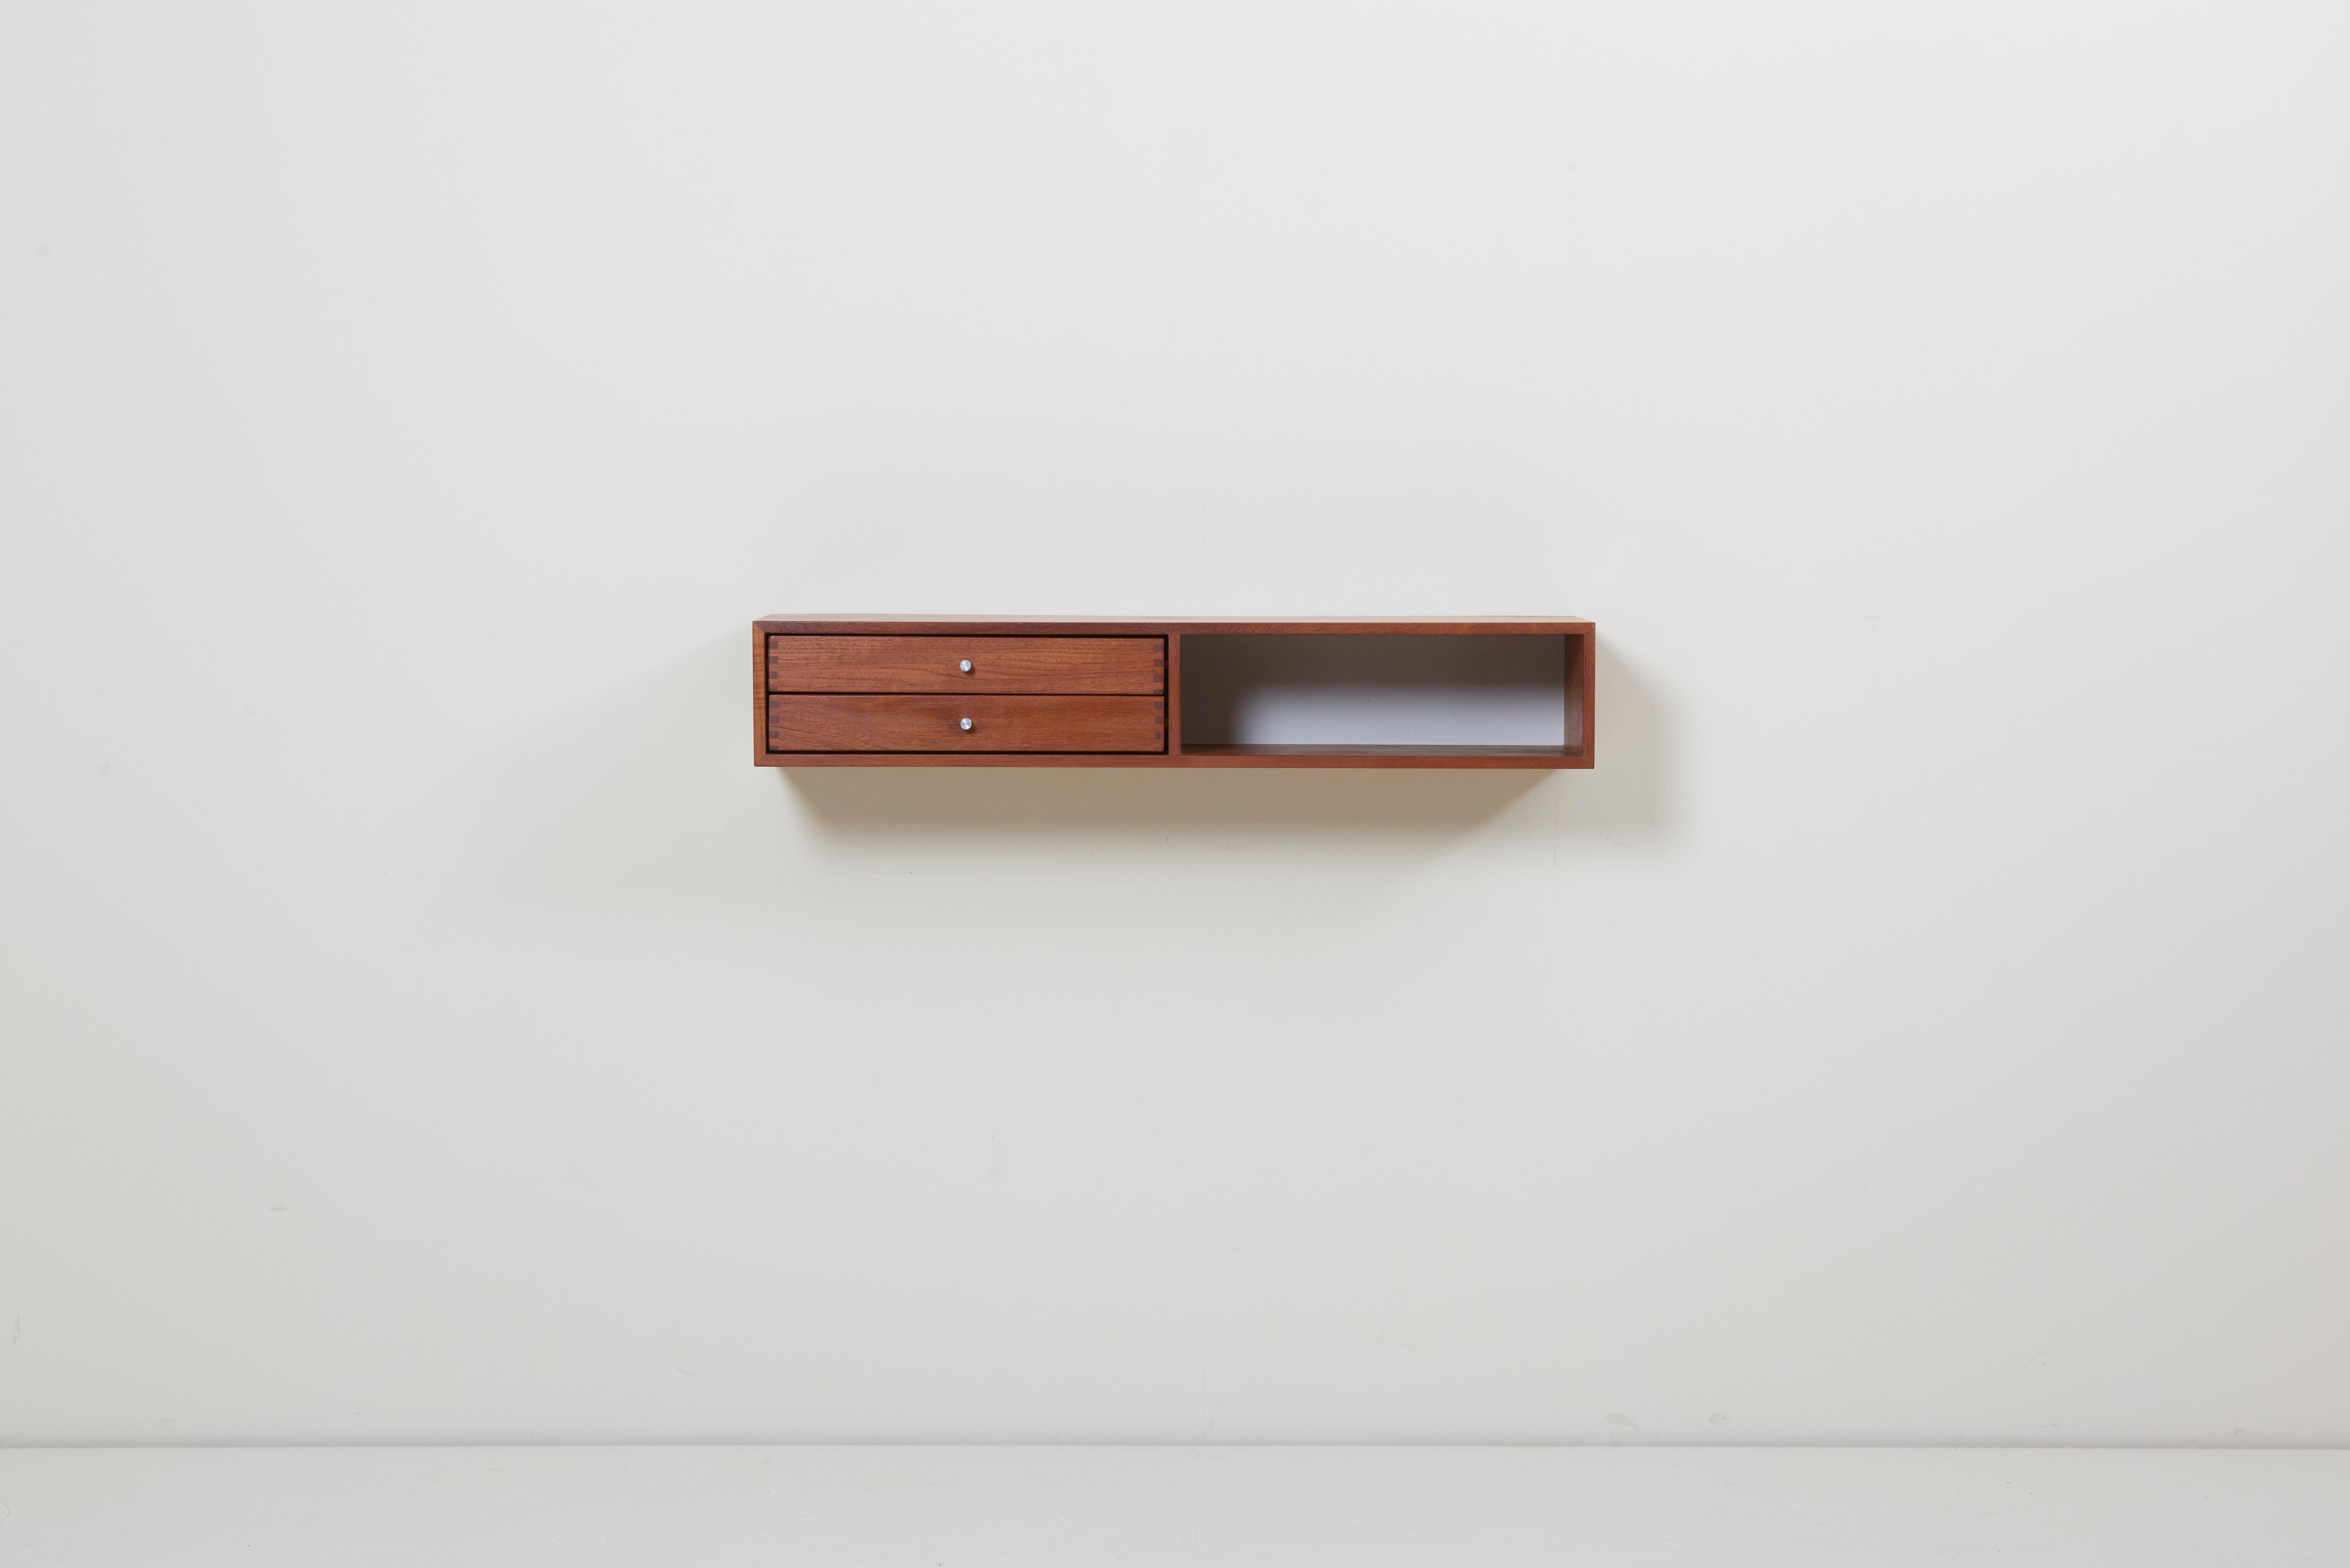 Teak wall shelf with two drawers by Aksel Kjersgaard for Kai Kristiansen.